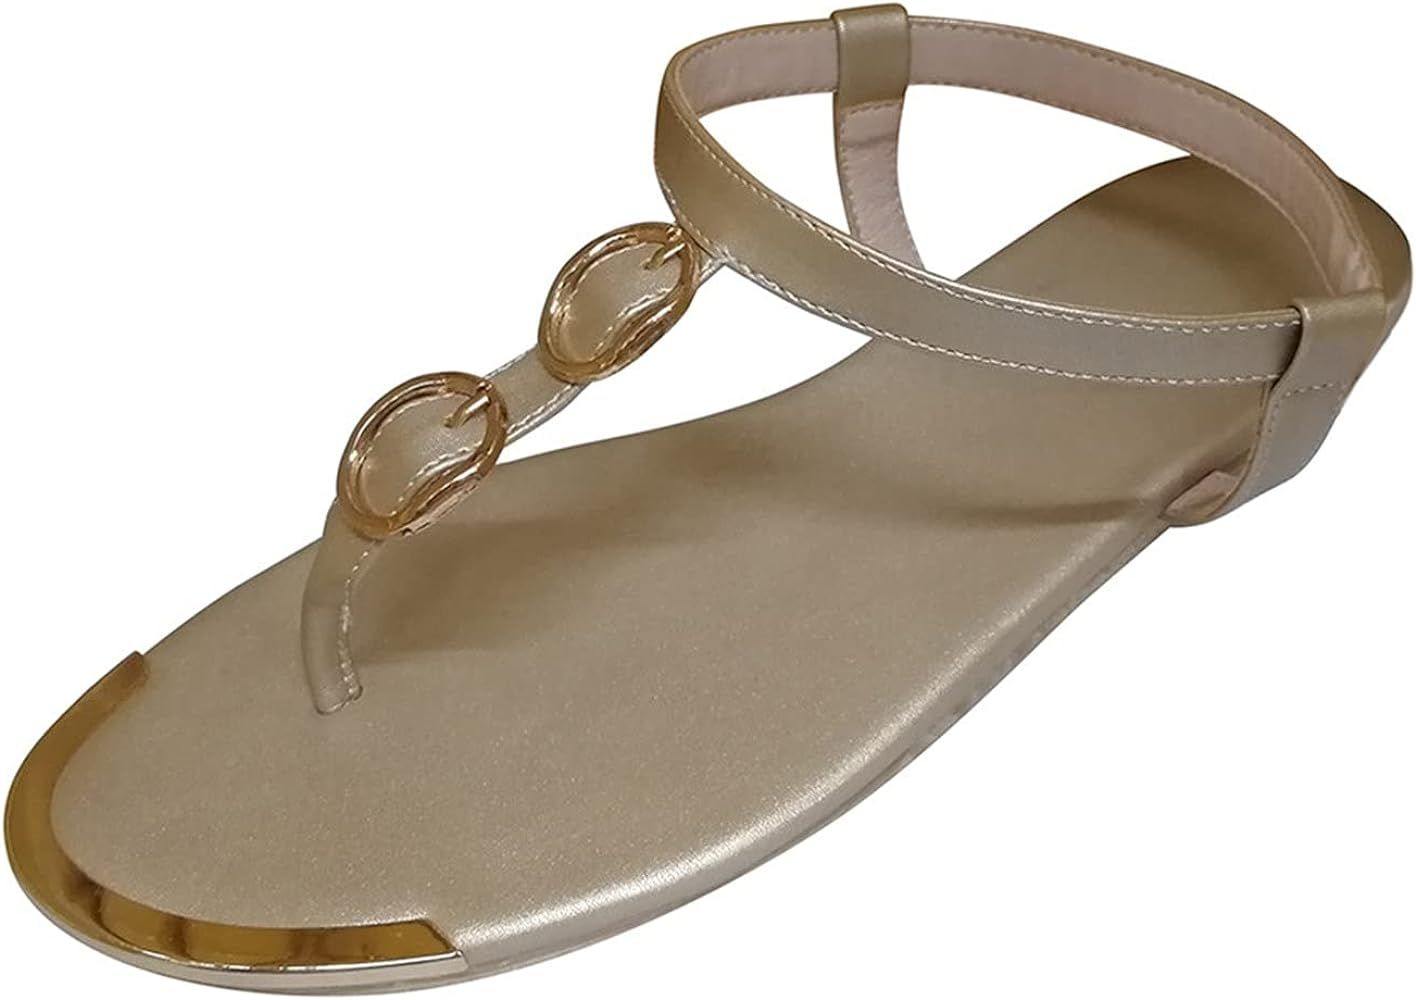 Sandals for Women Flat, Ulanda Women's Ladies Crystal Butterfly Flip Flops Sandals Casual Beach T... | Amazon (US)